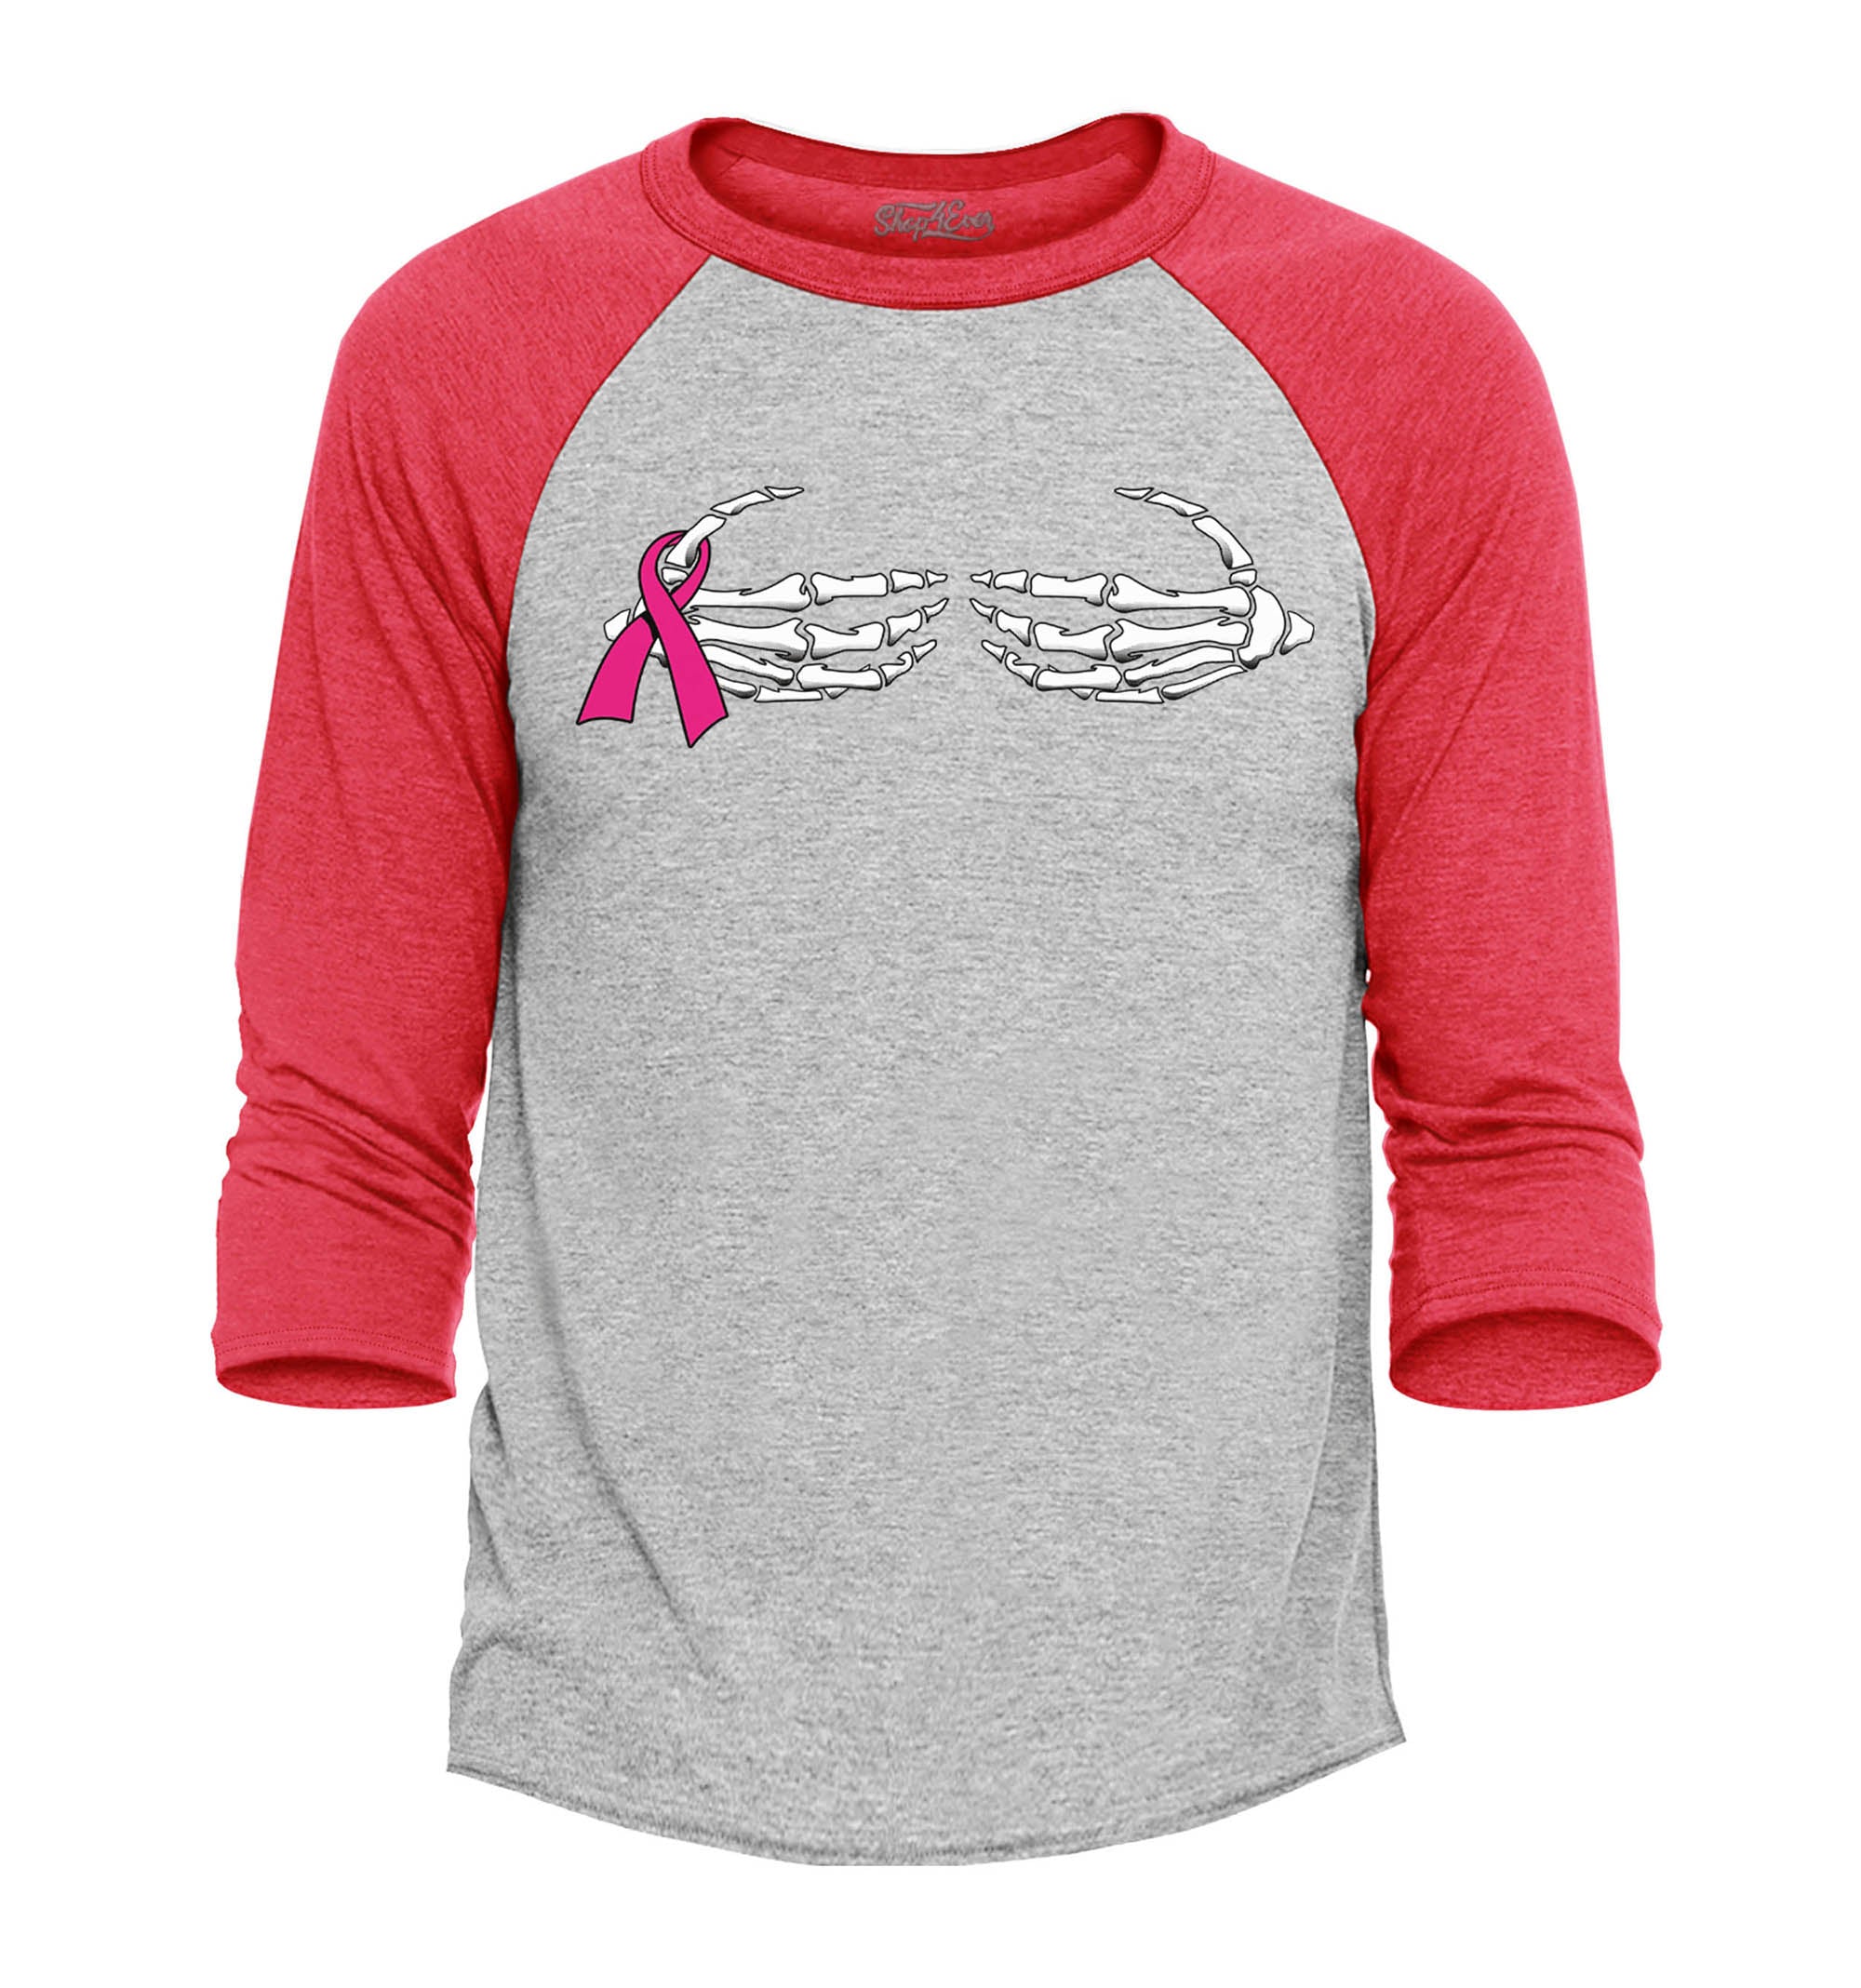 Skeleton Hands Pink Ribbon Breast Cancer Awareness Raglan Baseball Shirt